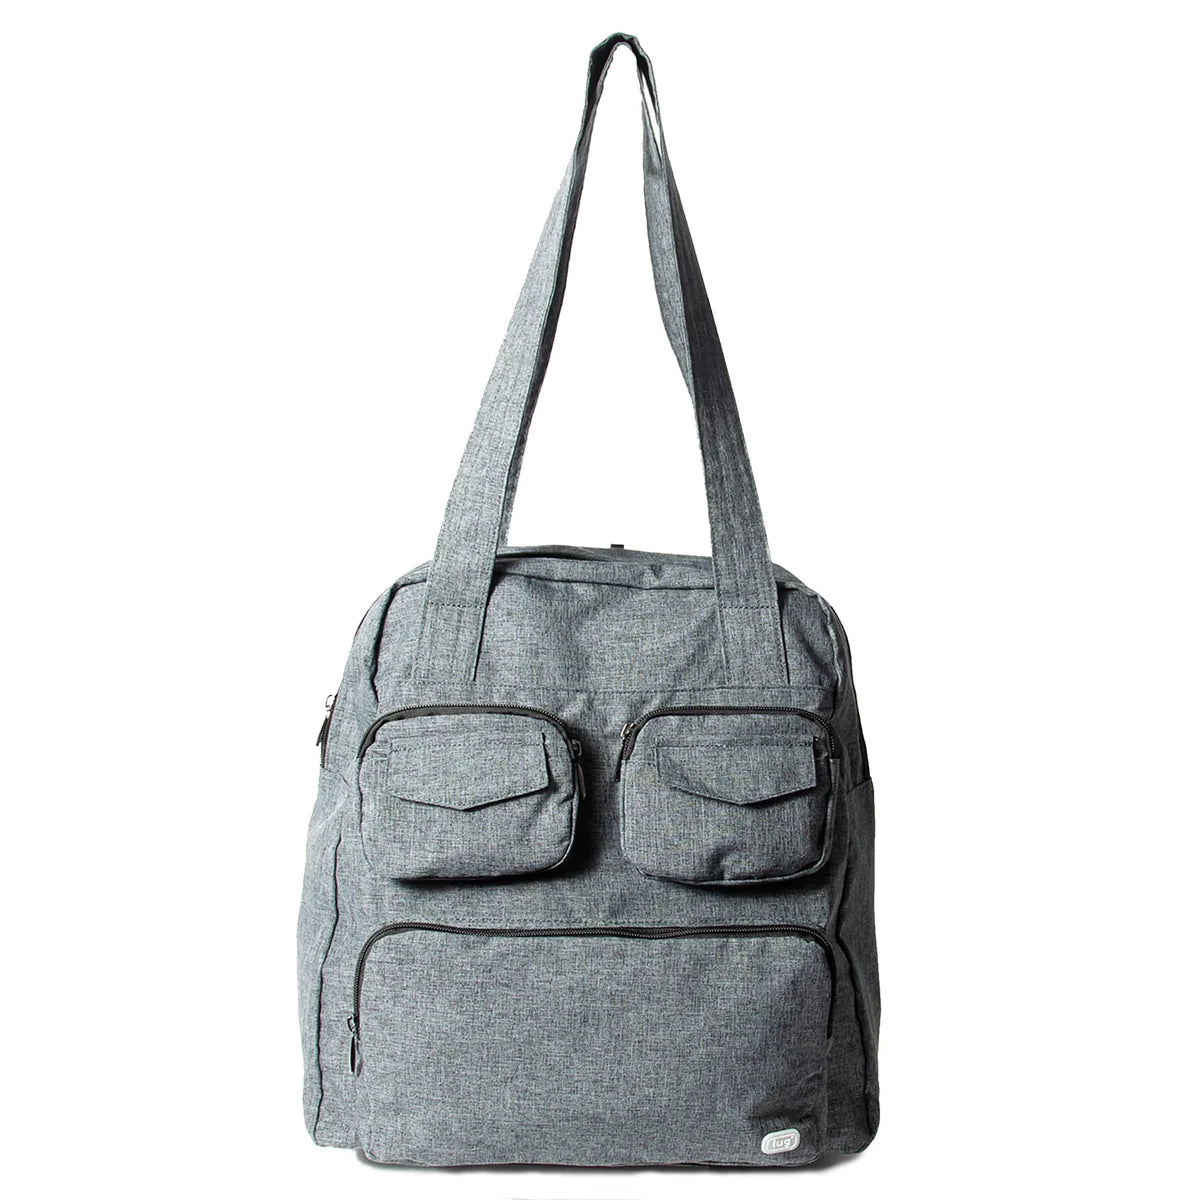 LUG Puddle Jumper Packable Tote Bag in Heather Grey